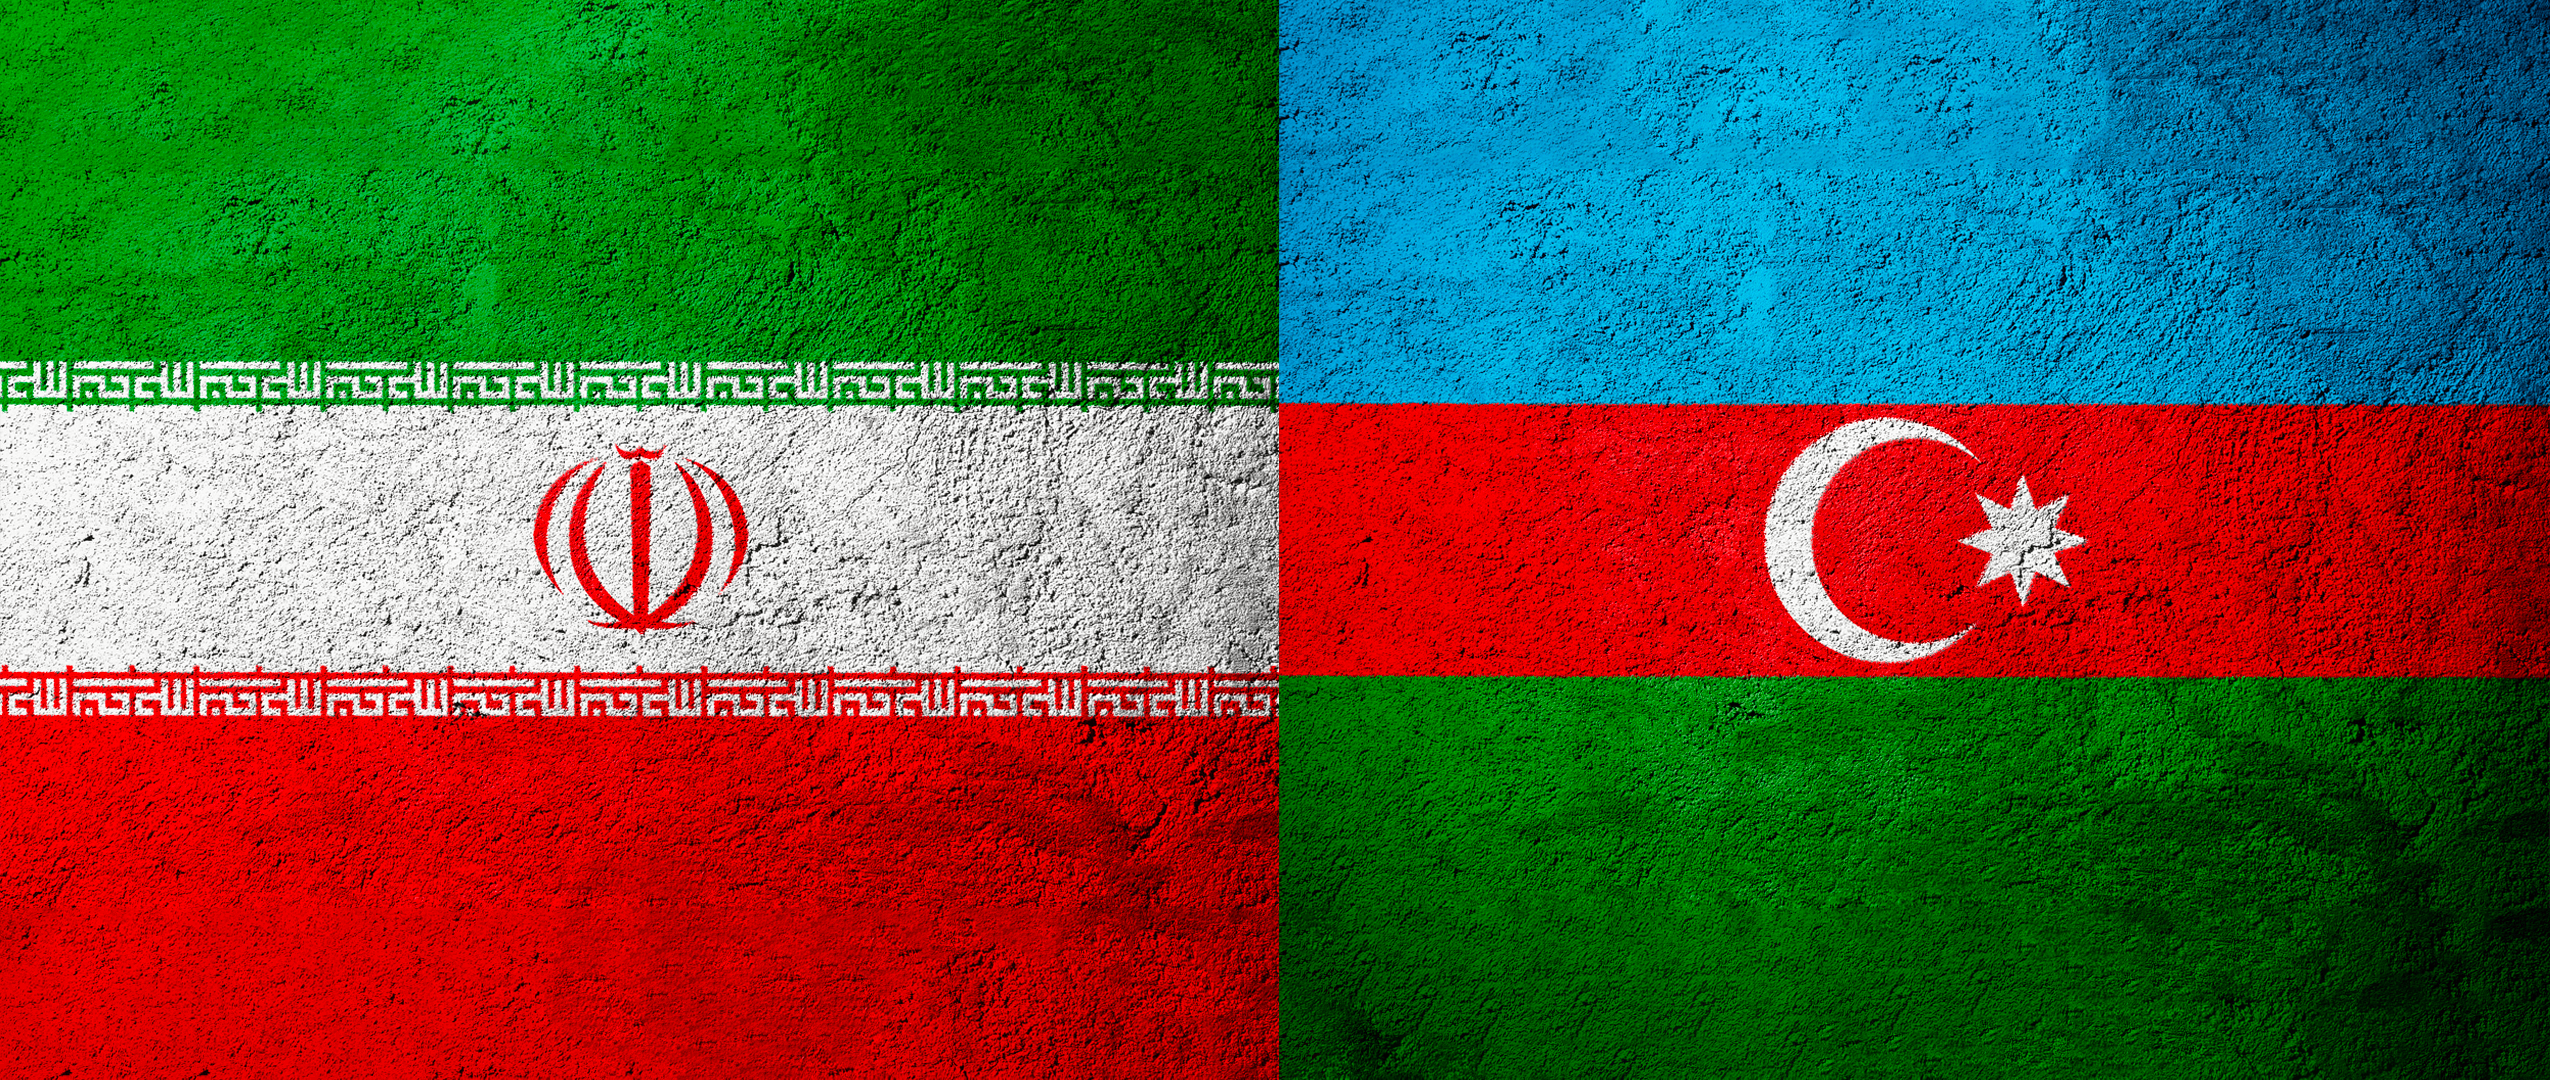 Elections Under Authoritarian Regimes: Azerbaijan and Iran